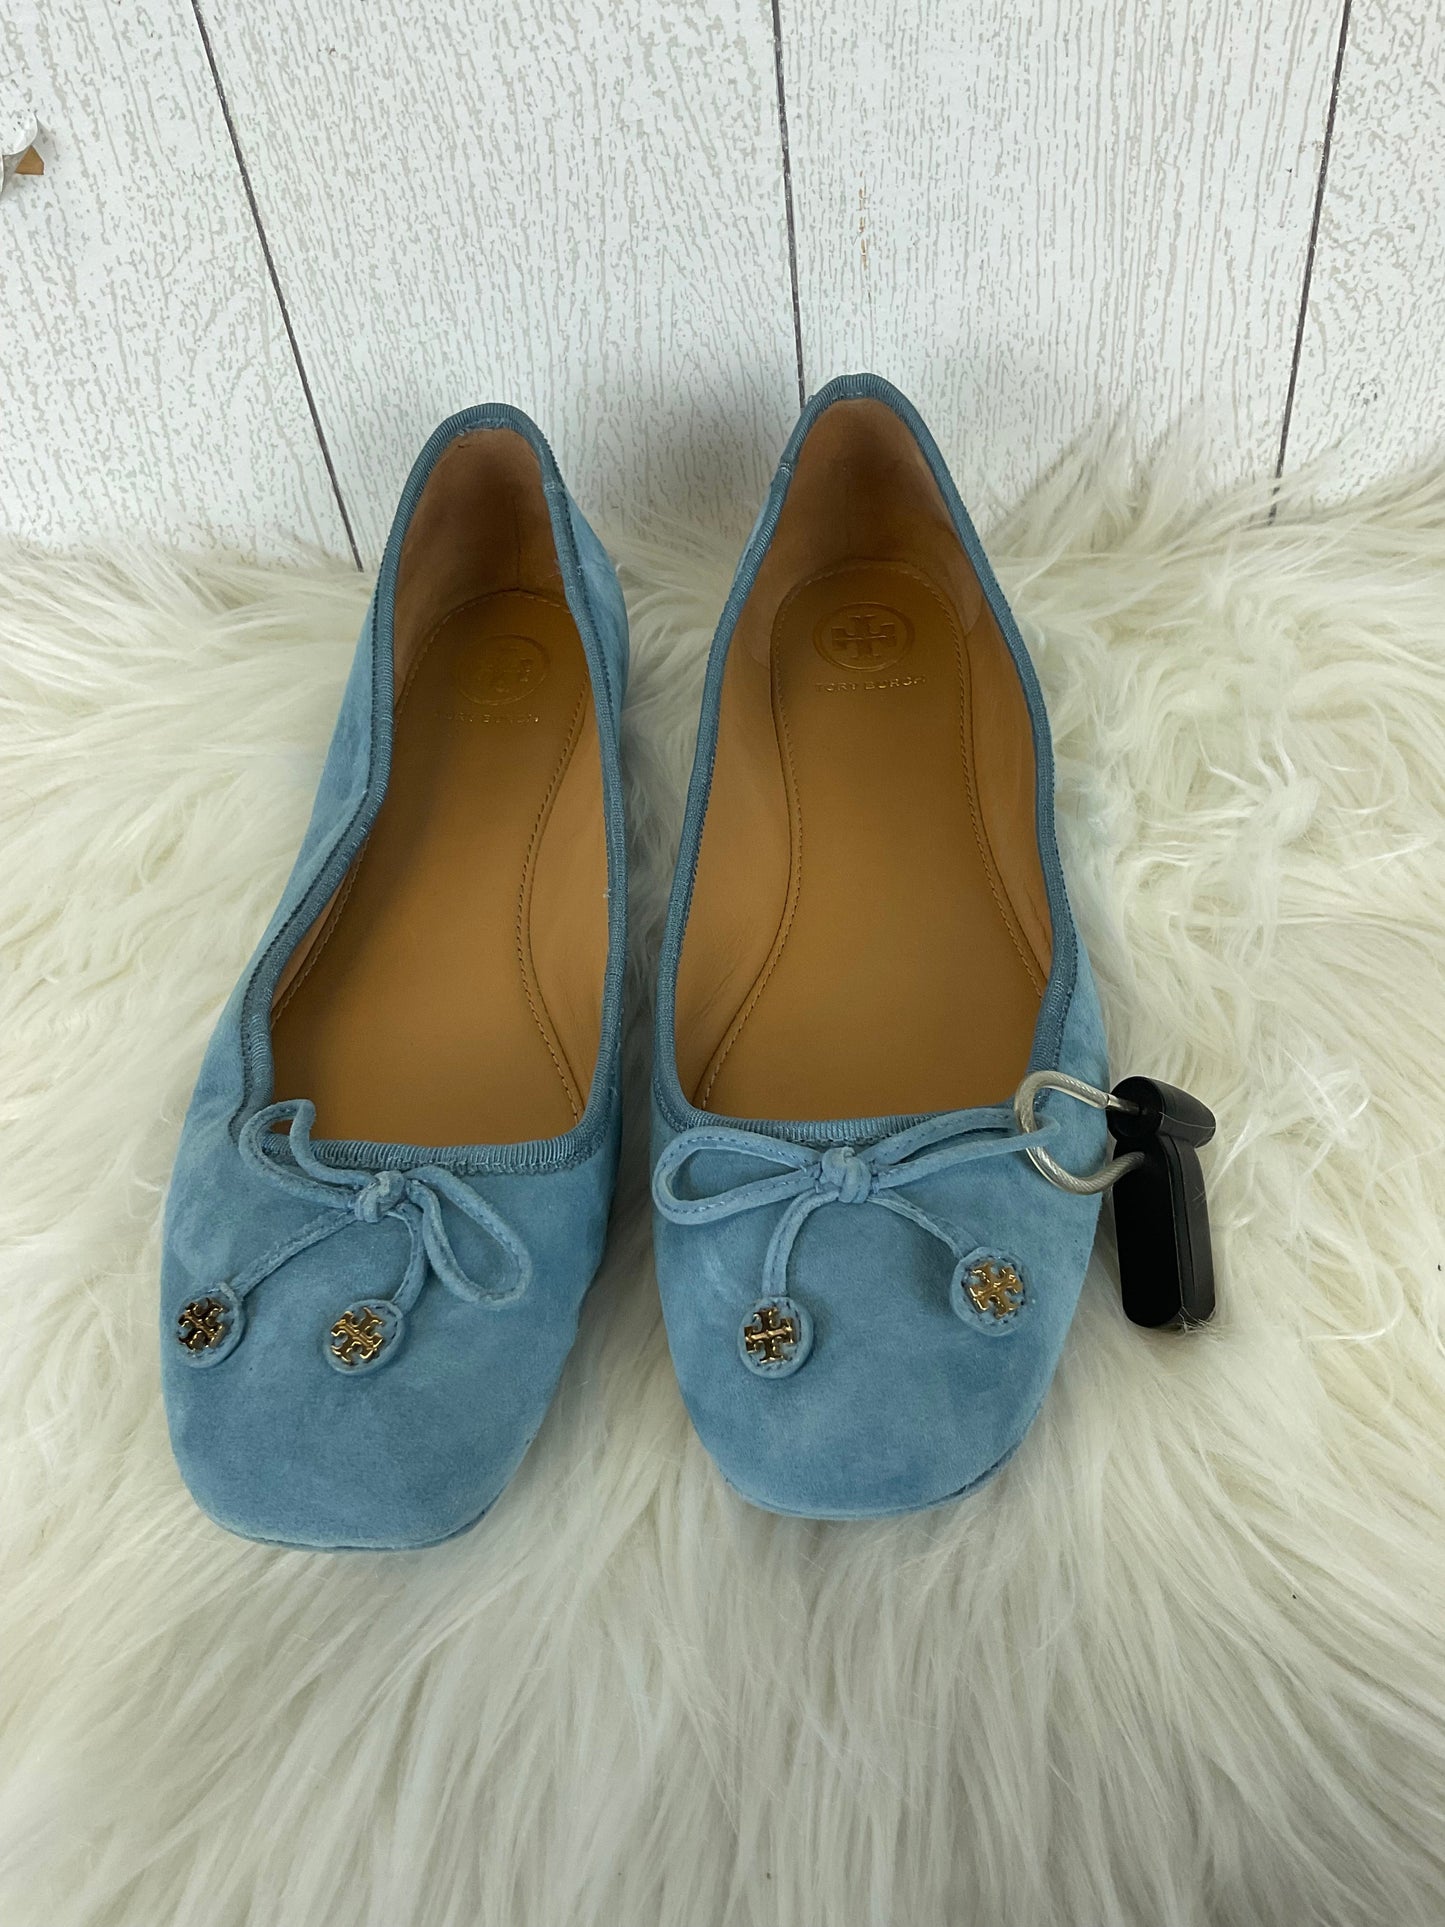 Blue Shoes Designer Tory Burch, Size 9.5